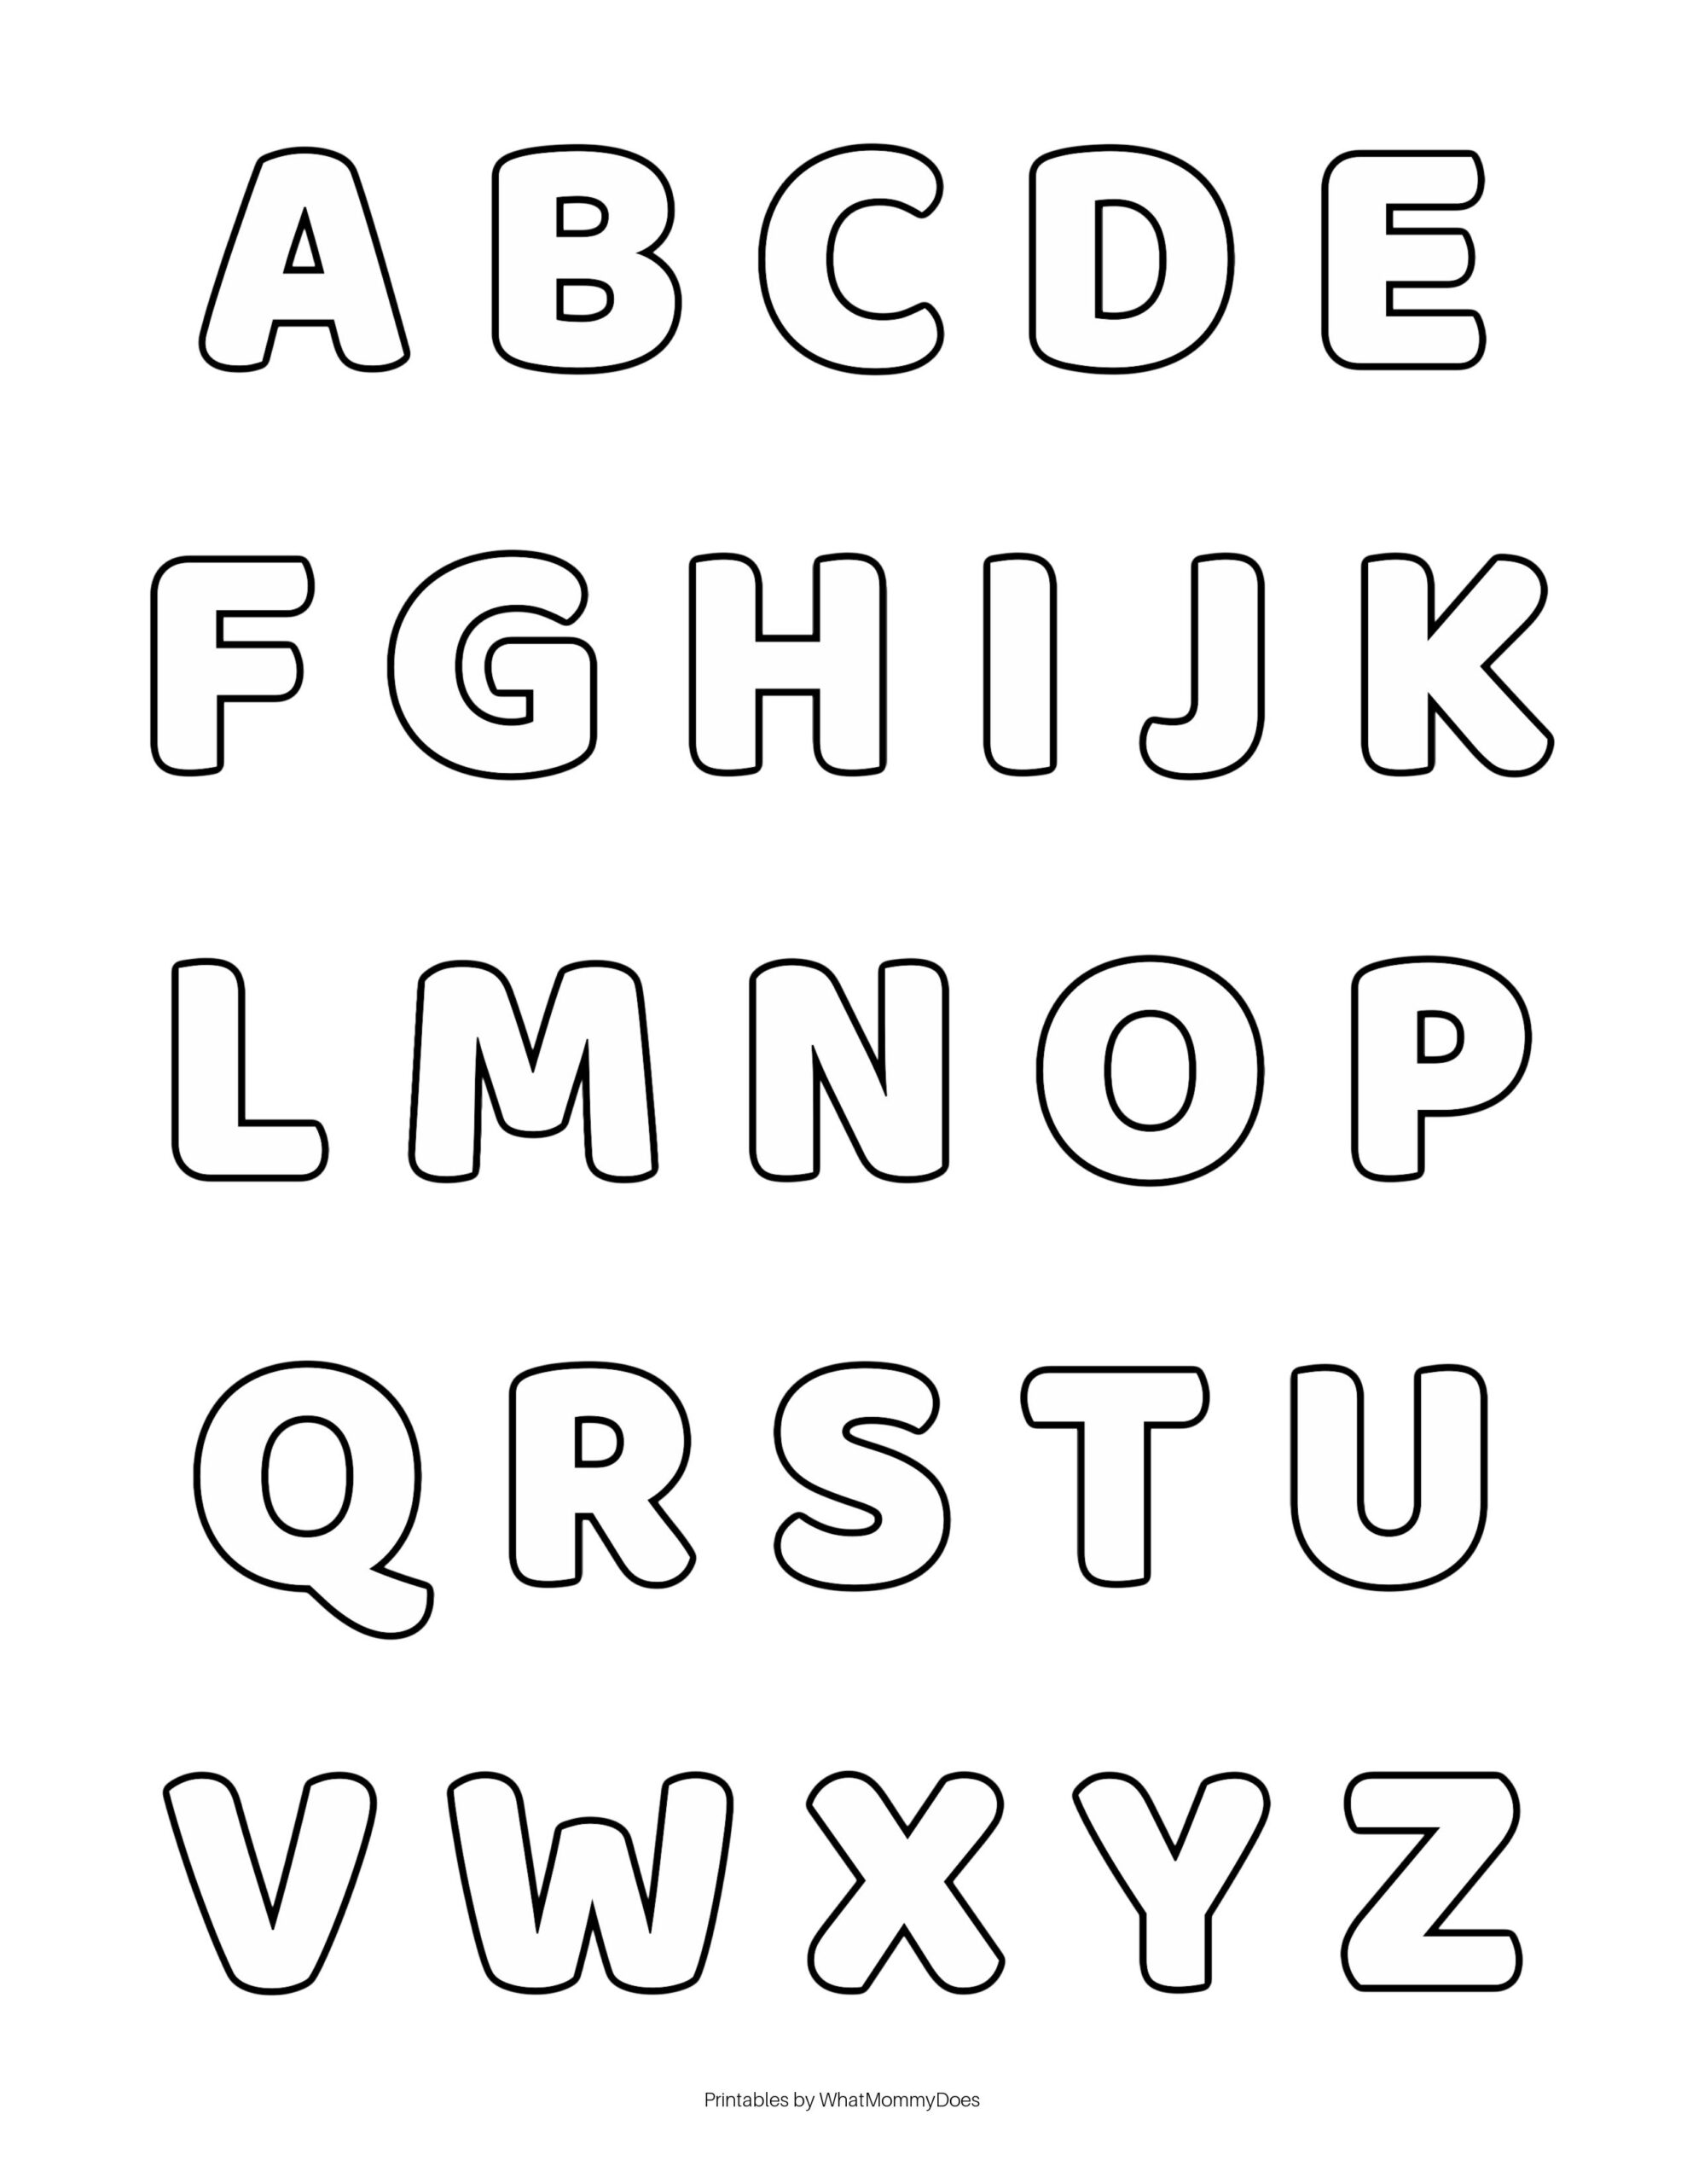 Free Alphabet Printables Letters Worksheets Stencils ABC Flash Cards Printable Alphabet Letters Free Alphabet Printables Free Printable Alphabet Letters - Free Printable Alphabet Letters